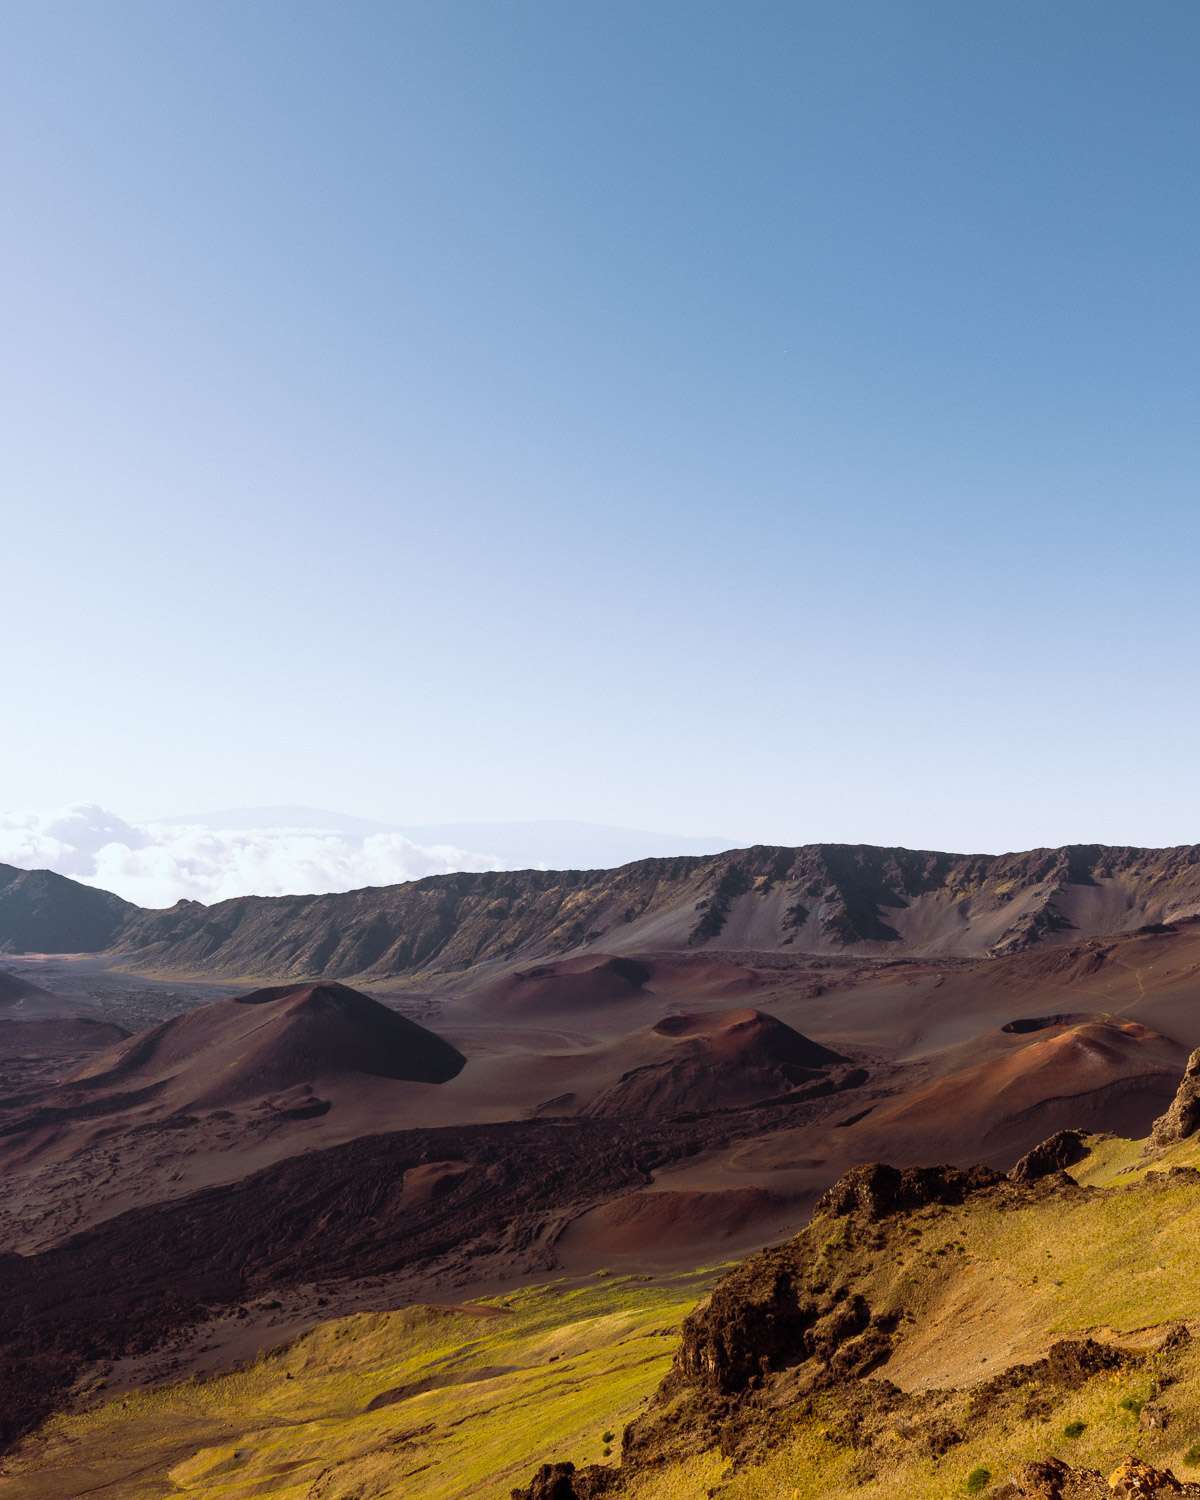 Rachel Off Duty: Best Things to Do on Maui – Visit Haleakala National Park